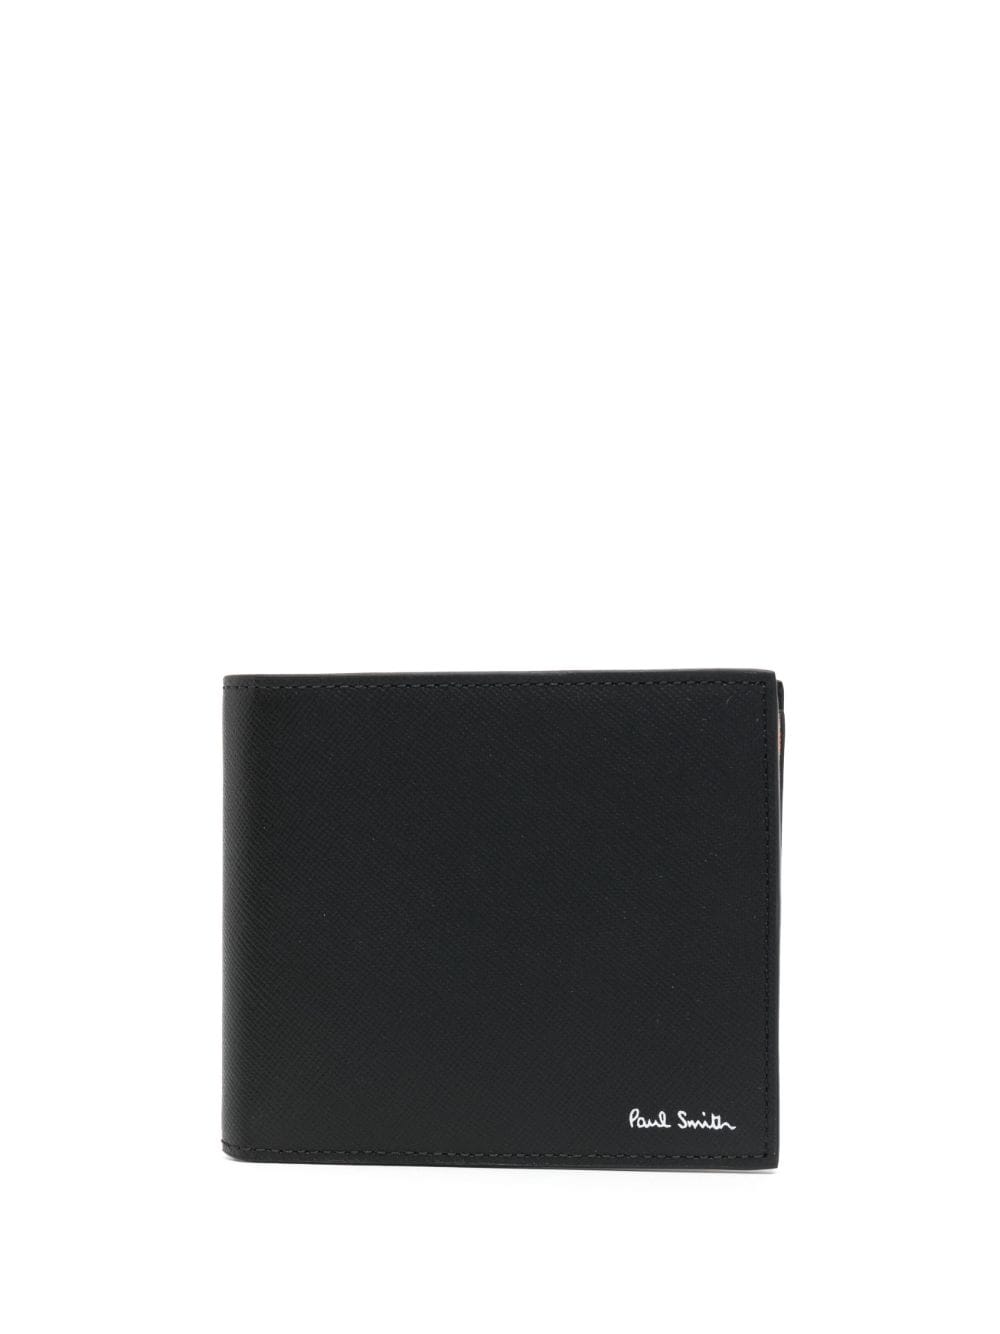 Paul Smith logo-print leather wallet - Black von Paul Smith